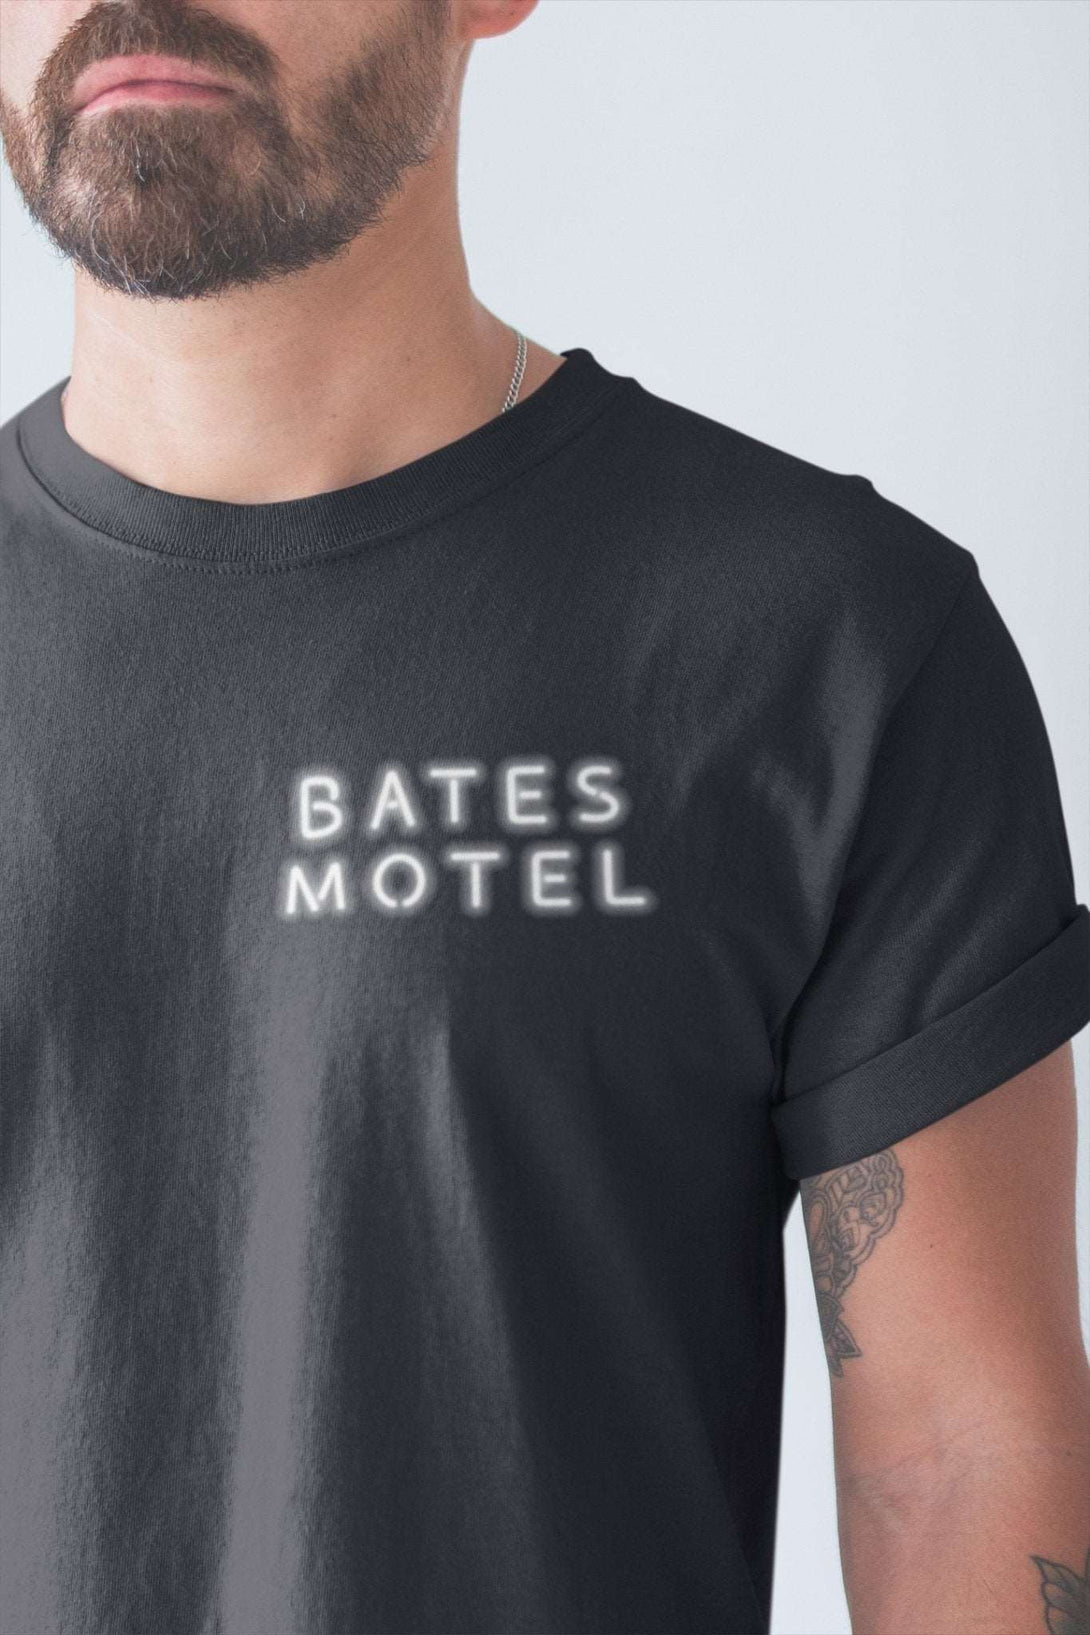 Bates Motel - Psycho Horror Movie Inspired Unisex Tshirt - Nightmare on Film Street Store